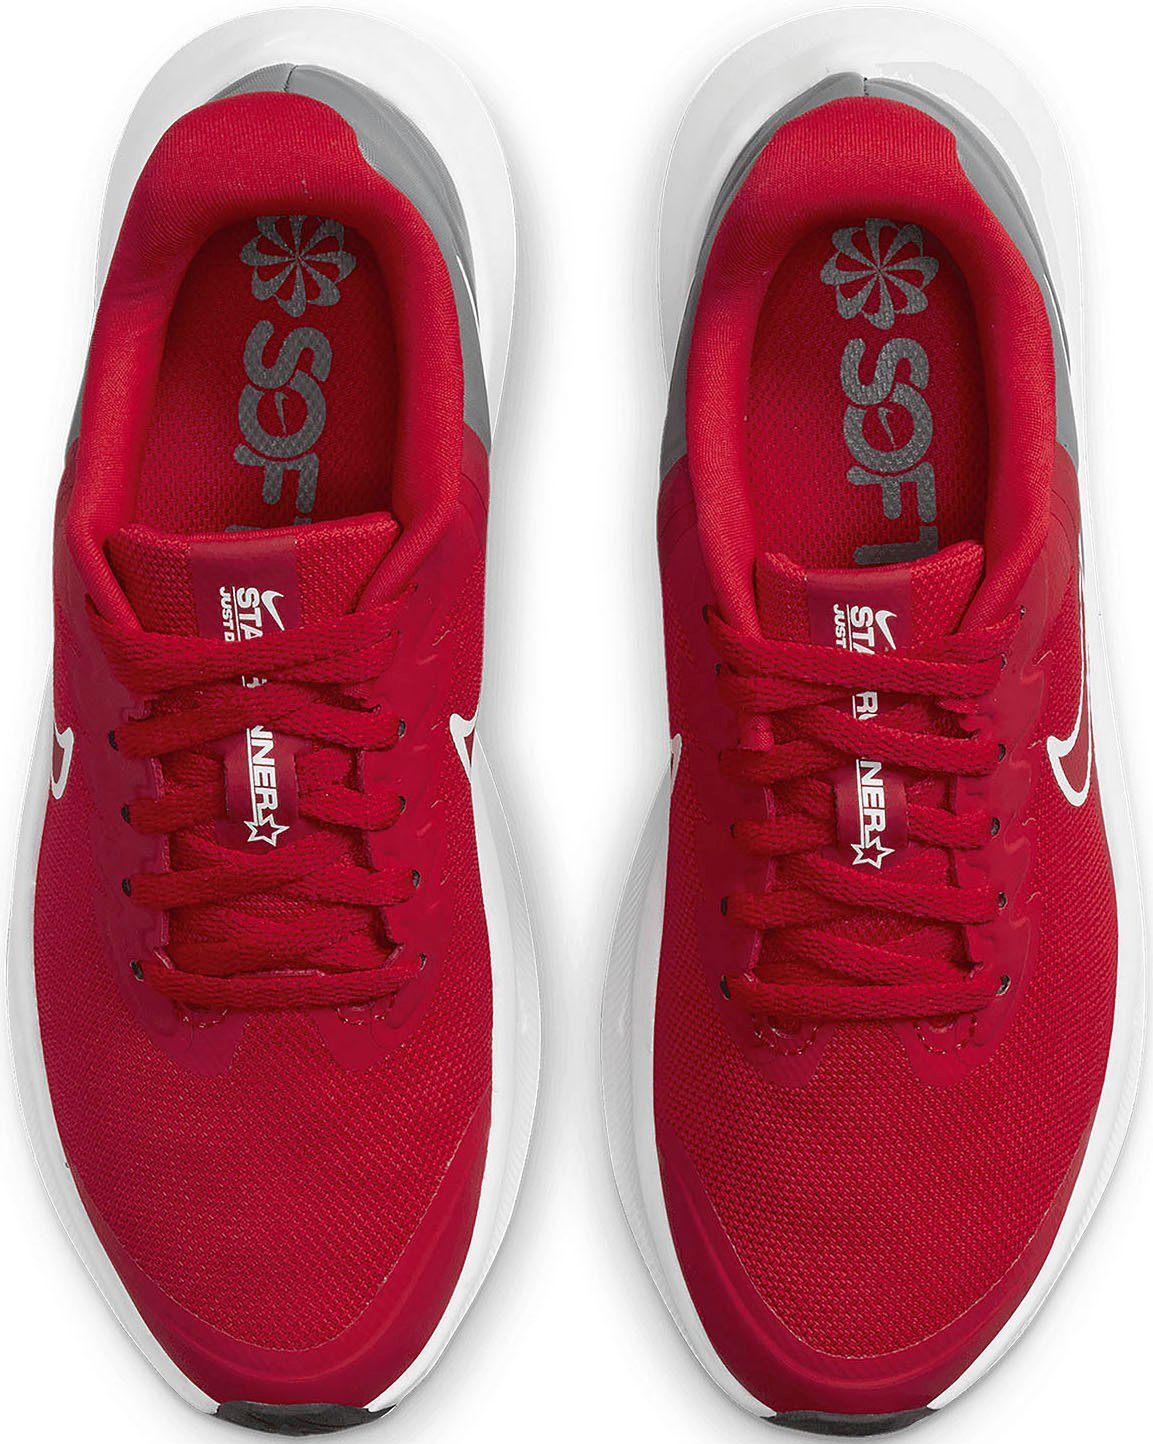 RUNNER (GS) Laufschuh 3 Nike STAR UNIVERSITY-RED-UNIVERSITY-RED-SMOKE-GREY